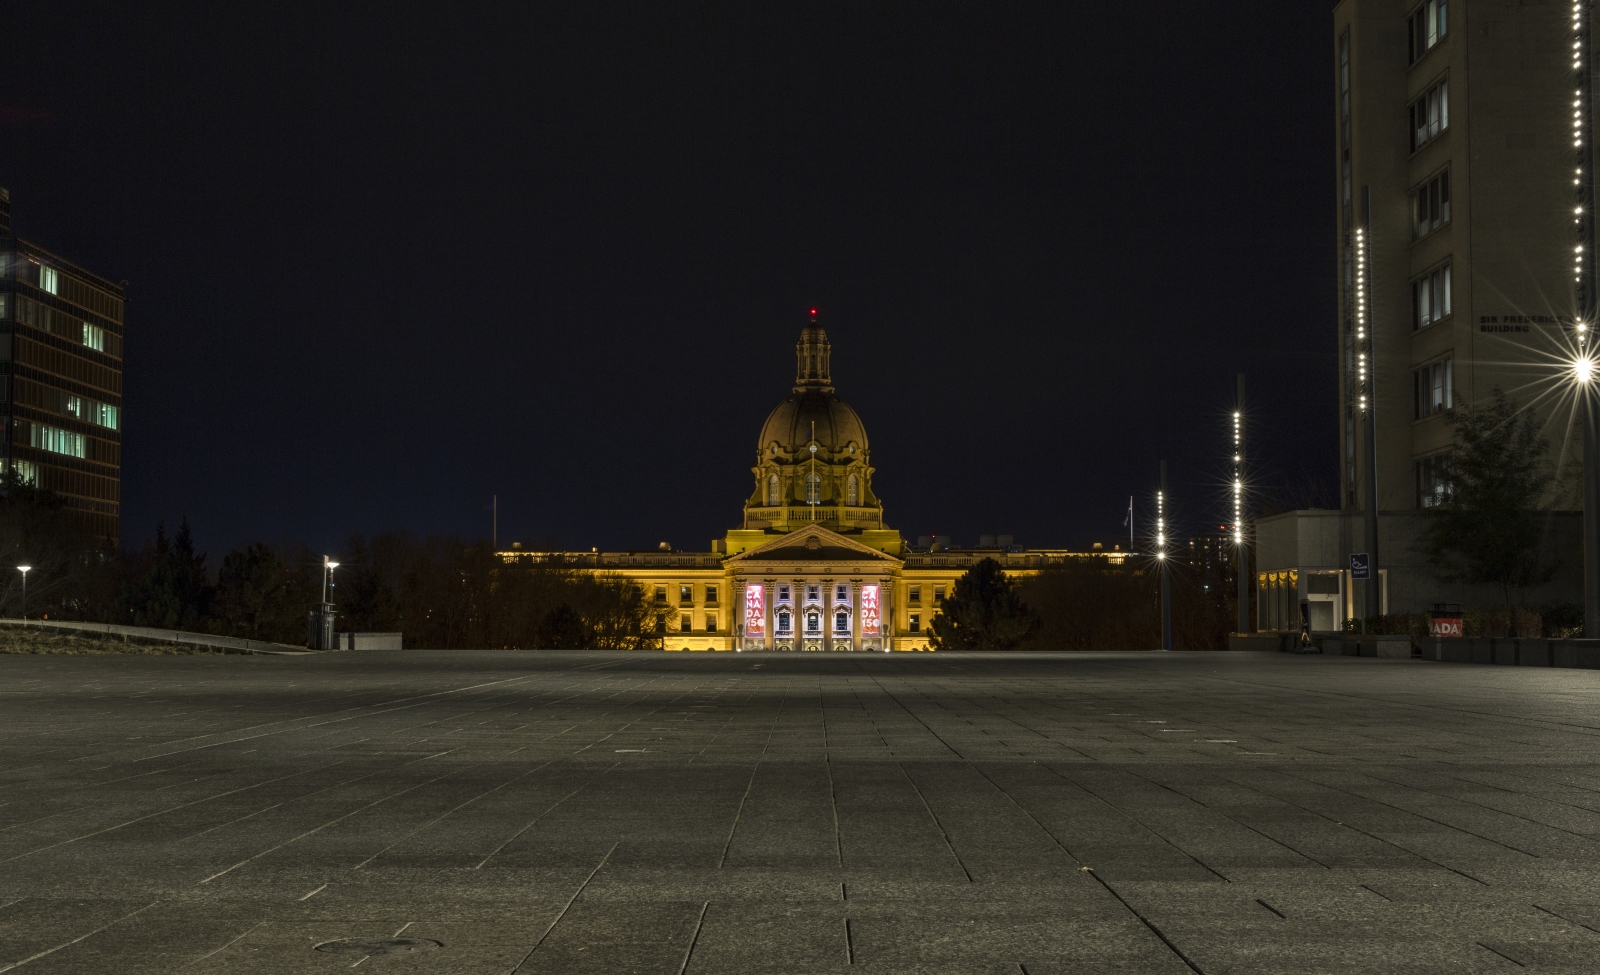 Alberta Legislature Building - 1